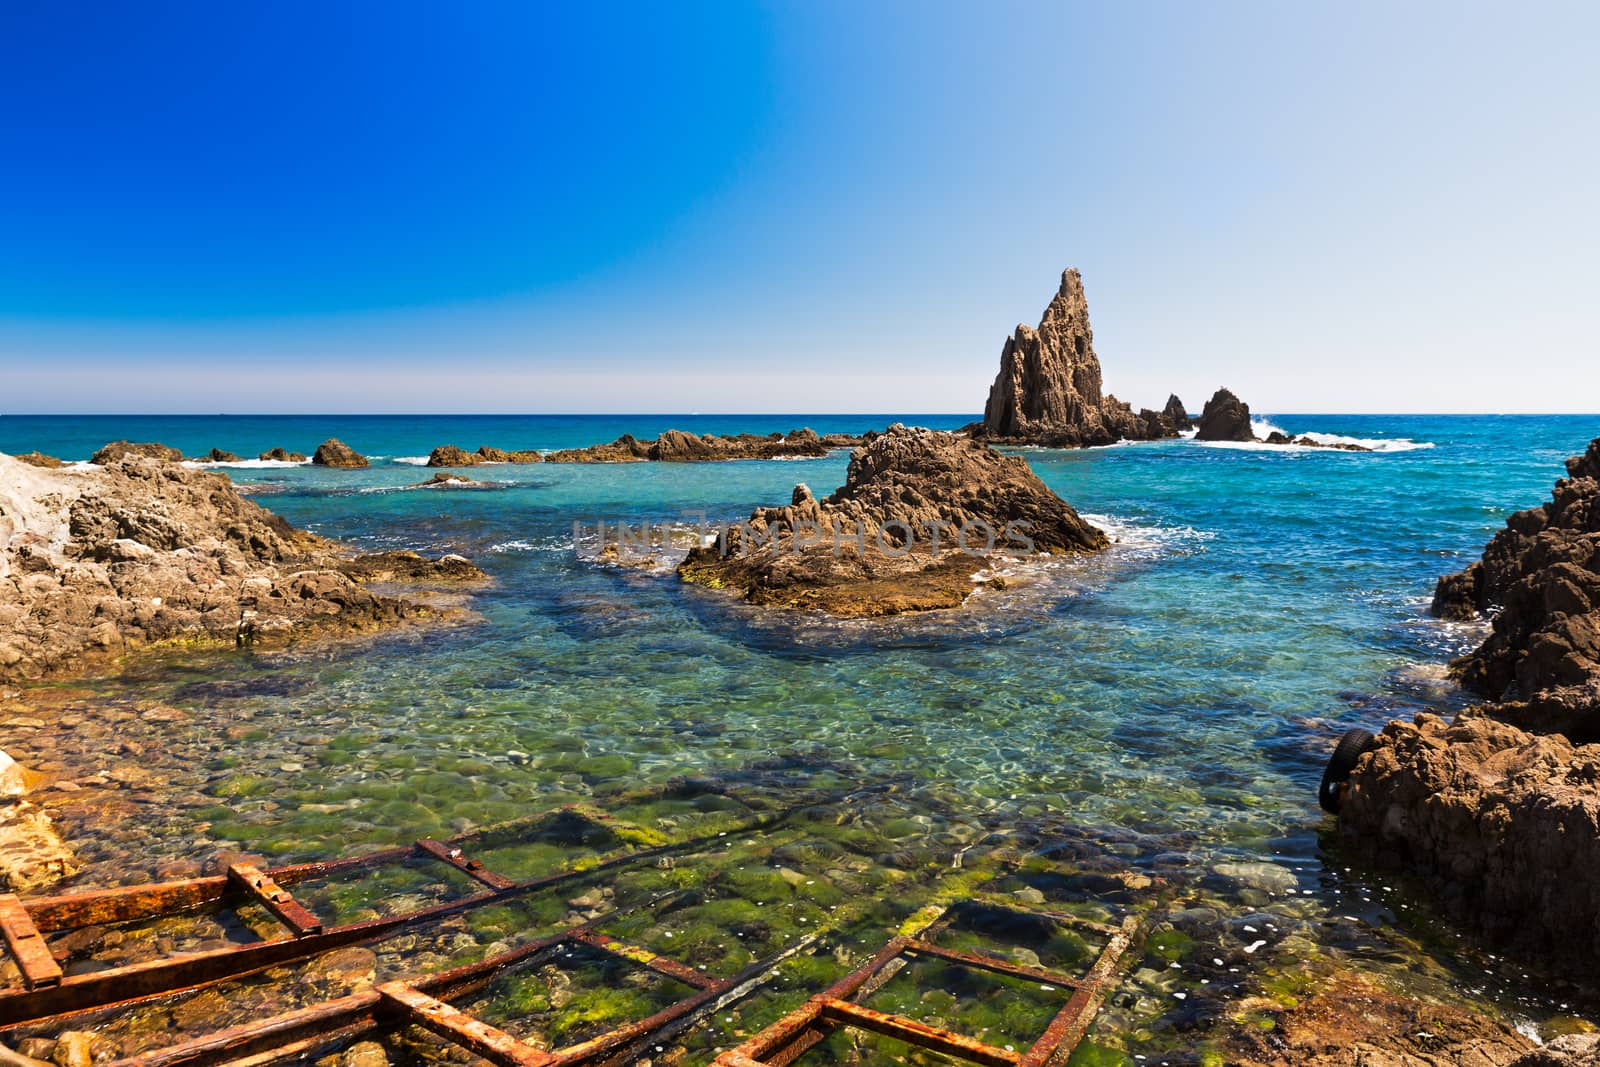 Seascape in Almeria, Cabo de Gata National Park, Spain by fisfra